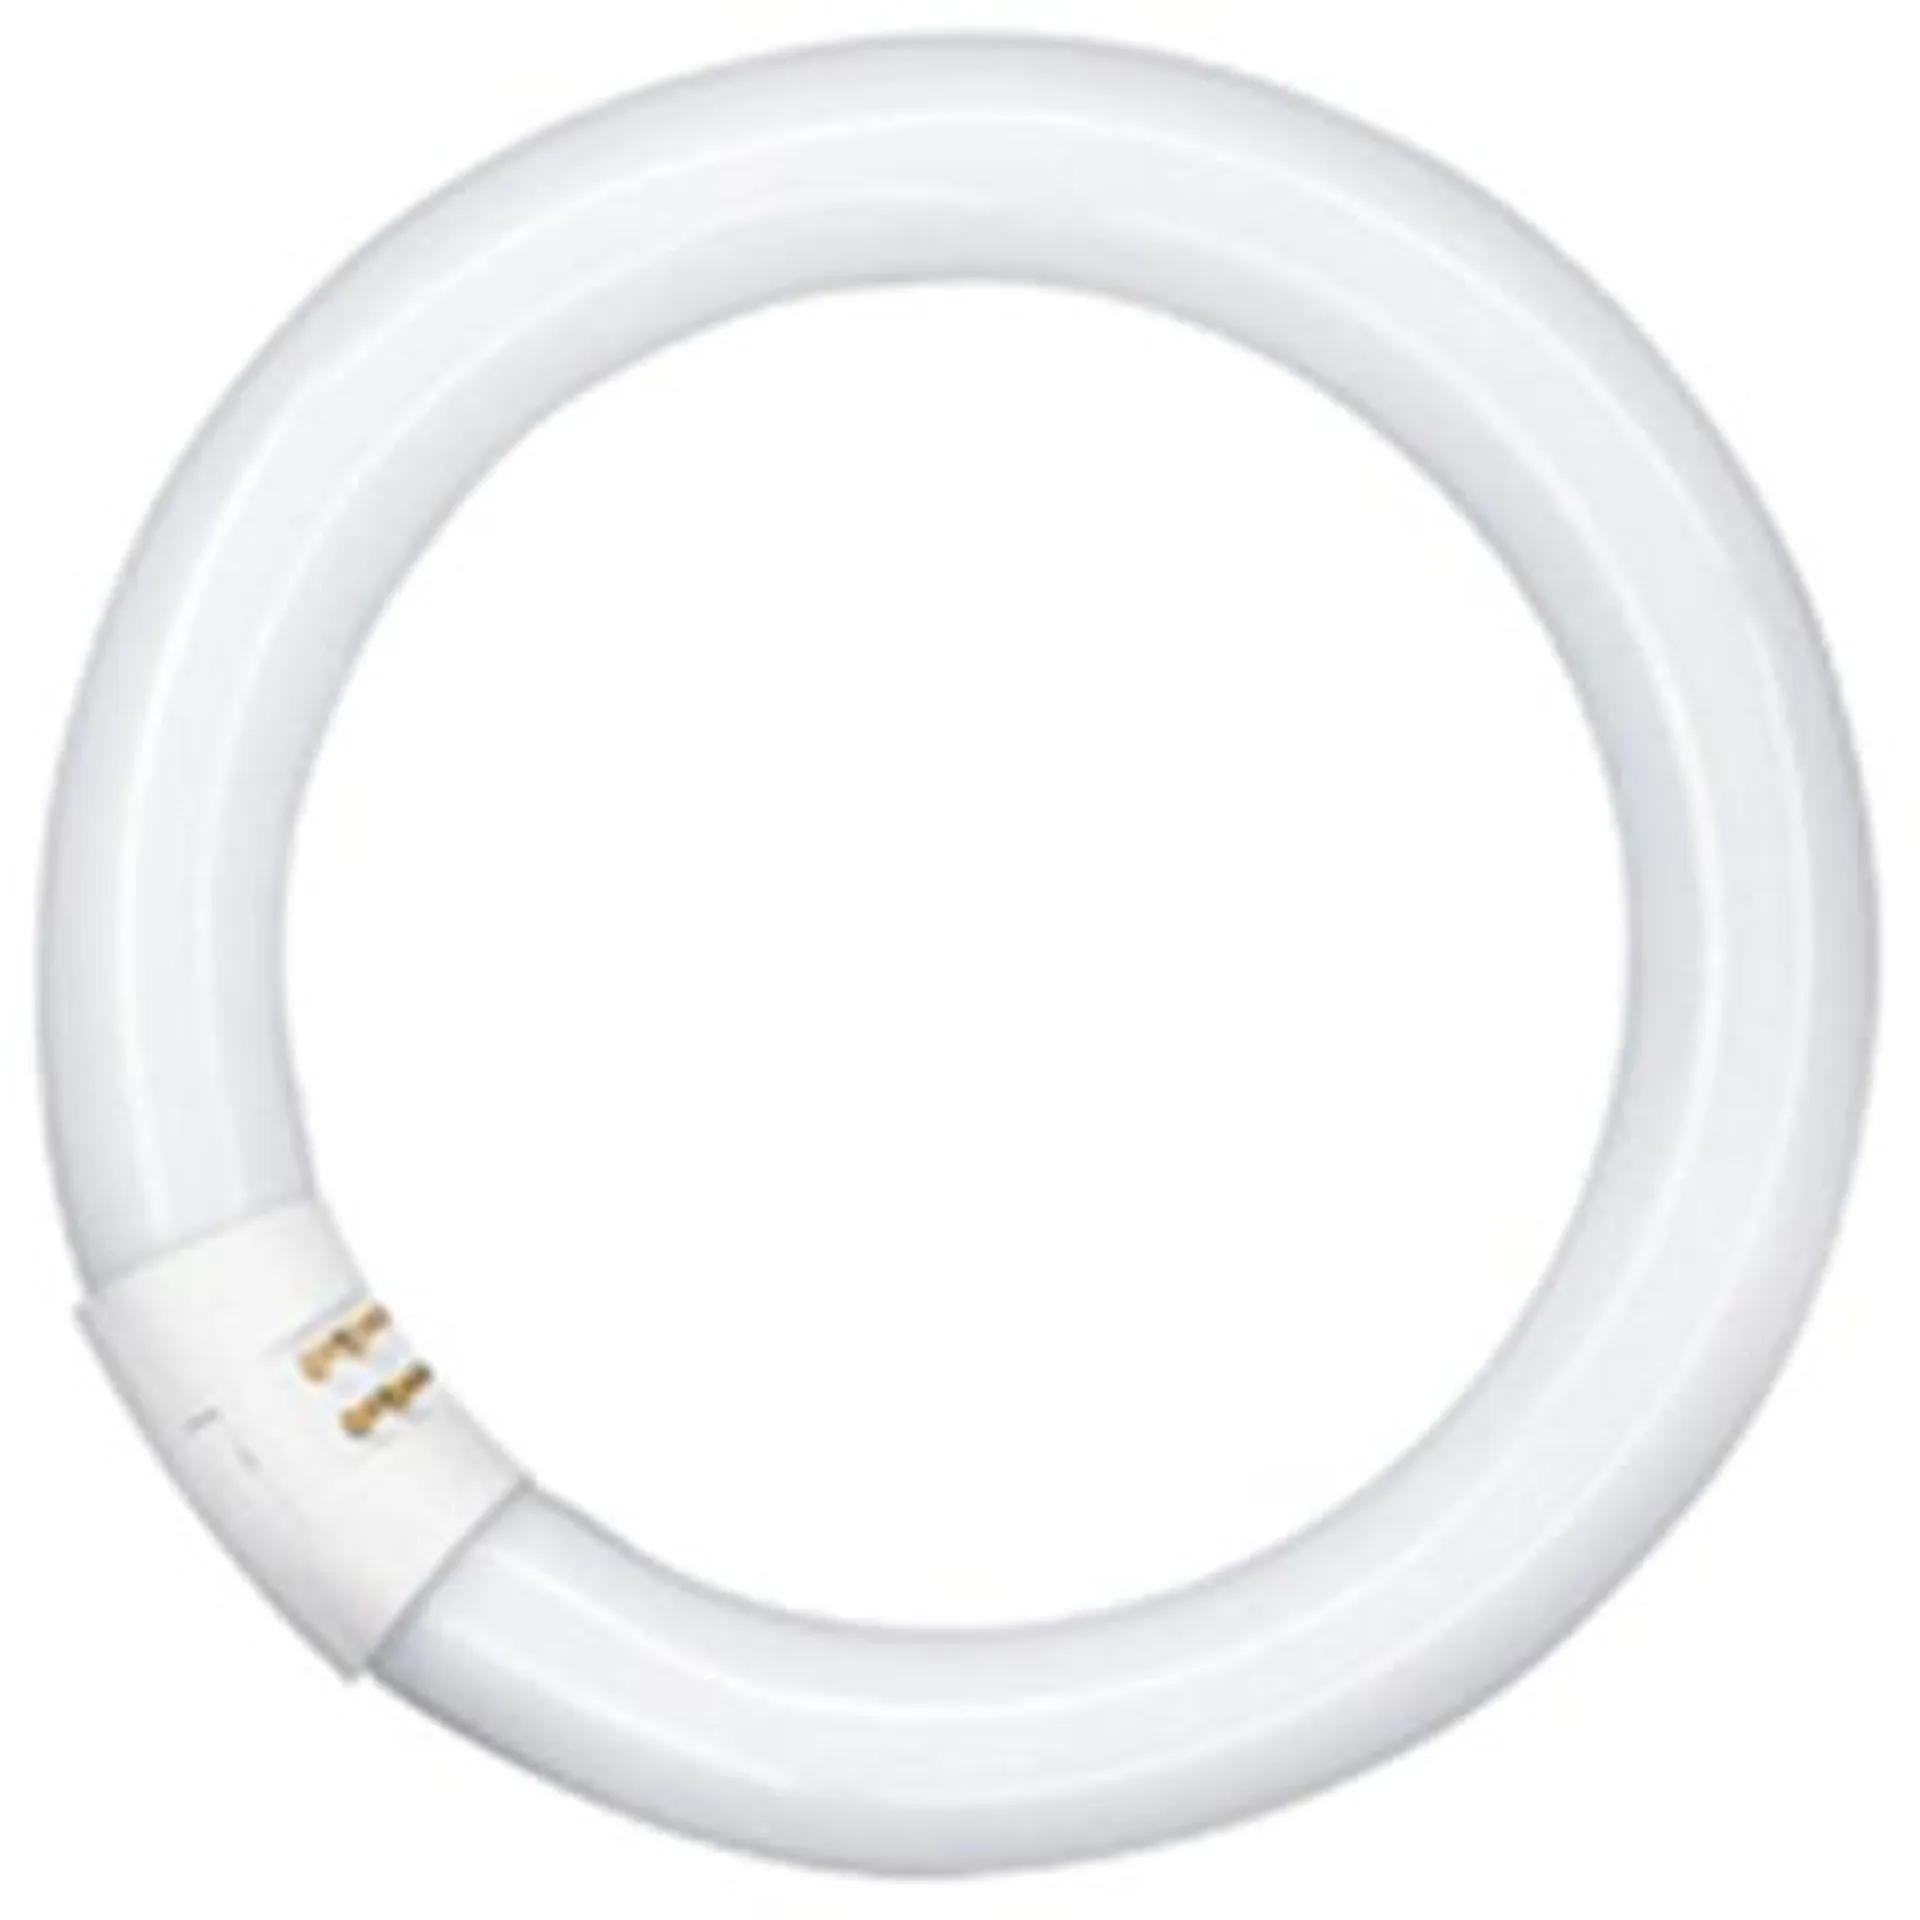 Osram TL buis cirkel T9 C 40W 840 (Cool white)